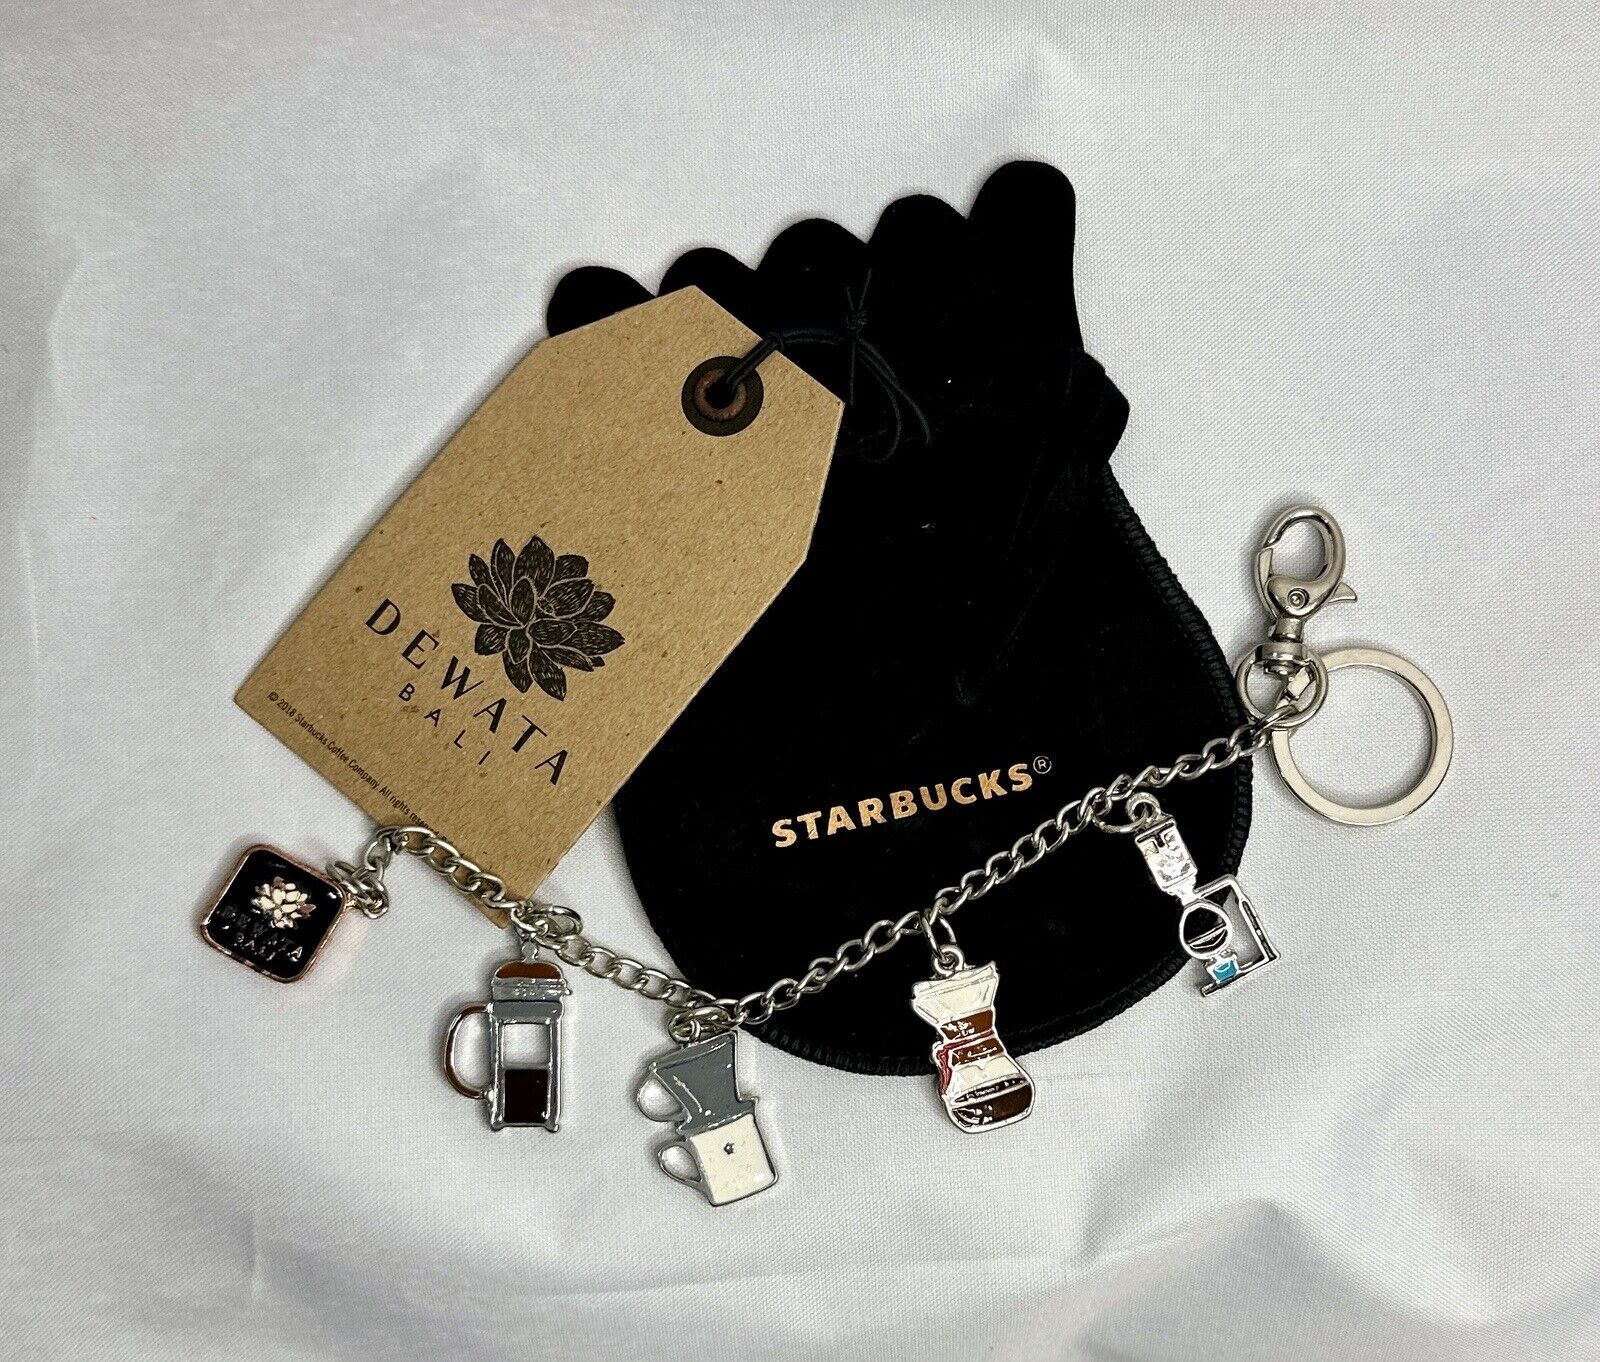 Starbucks Reserve Dewata Bali Five Charm Bracelet with Storage Bag